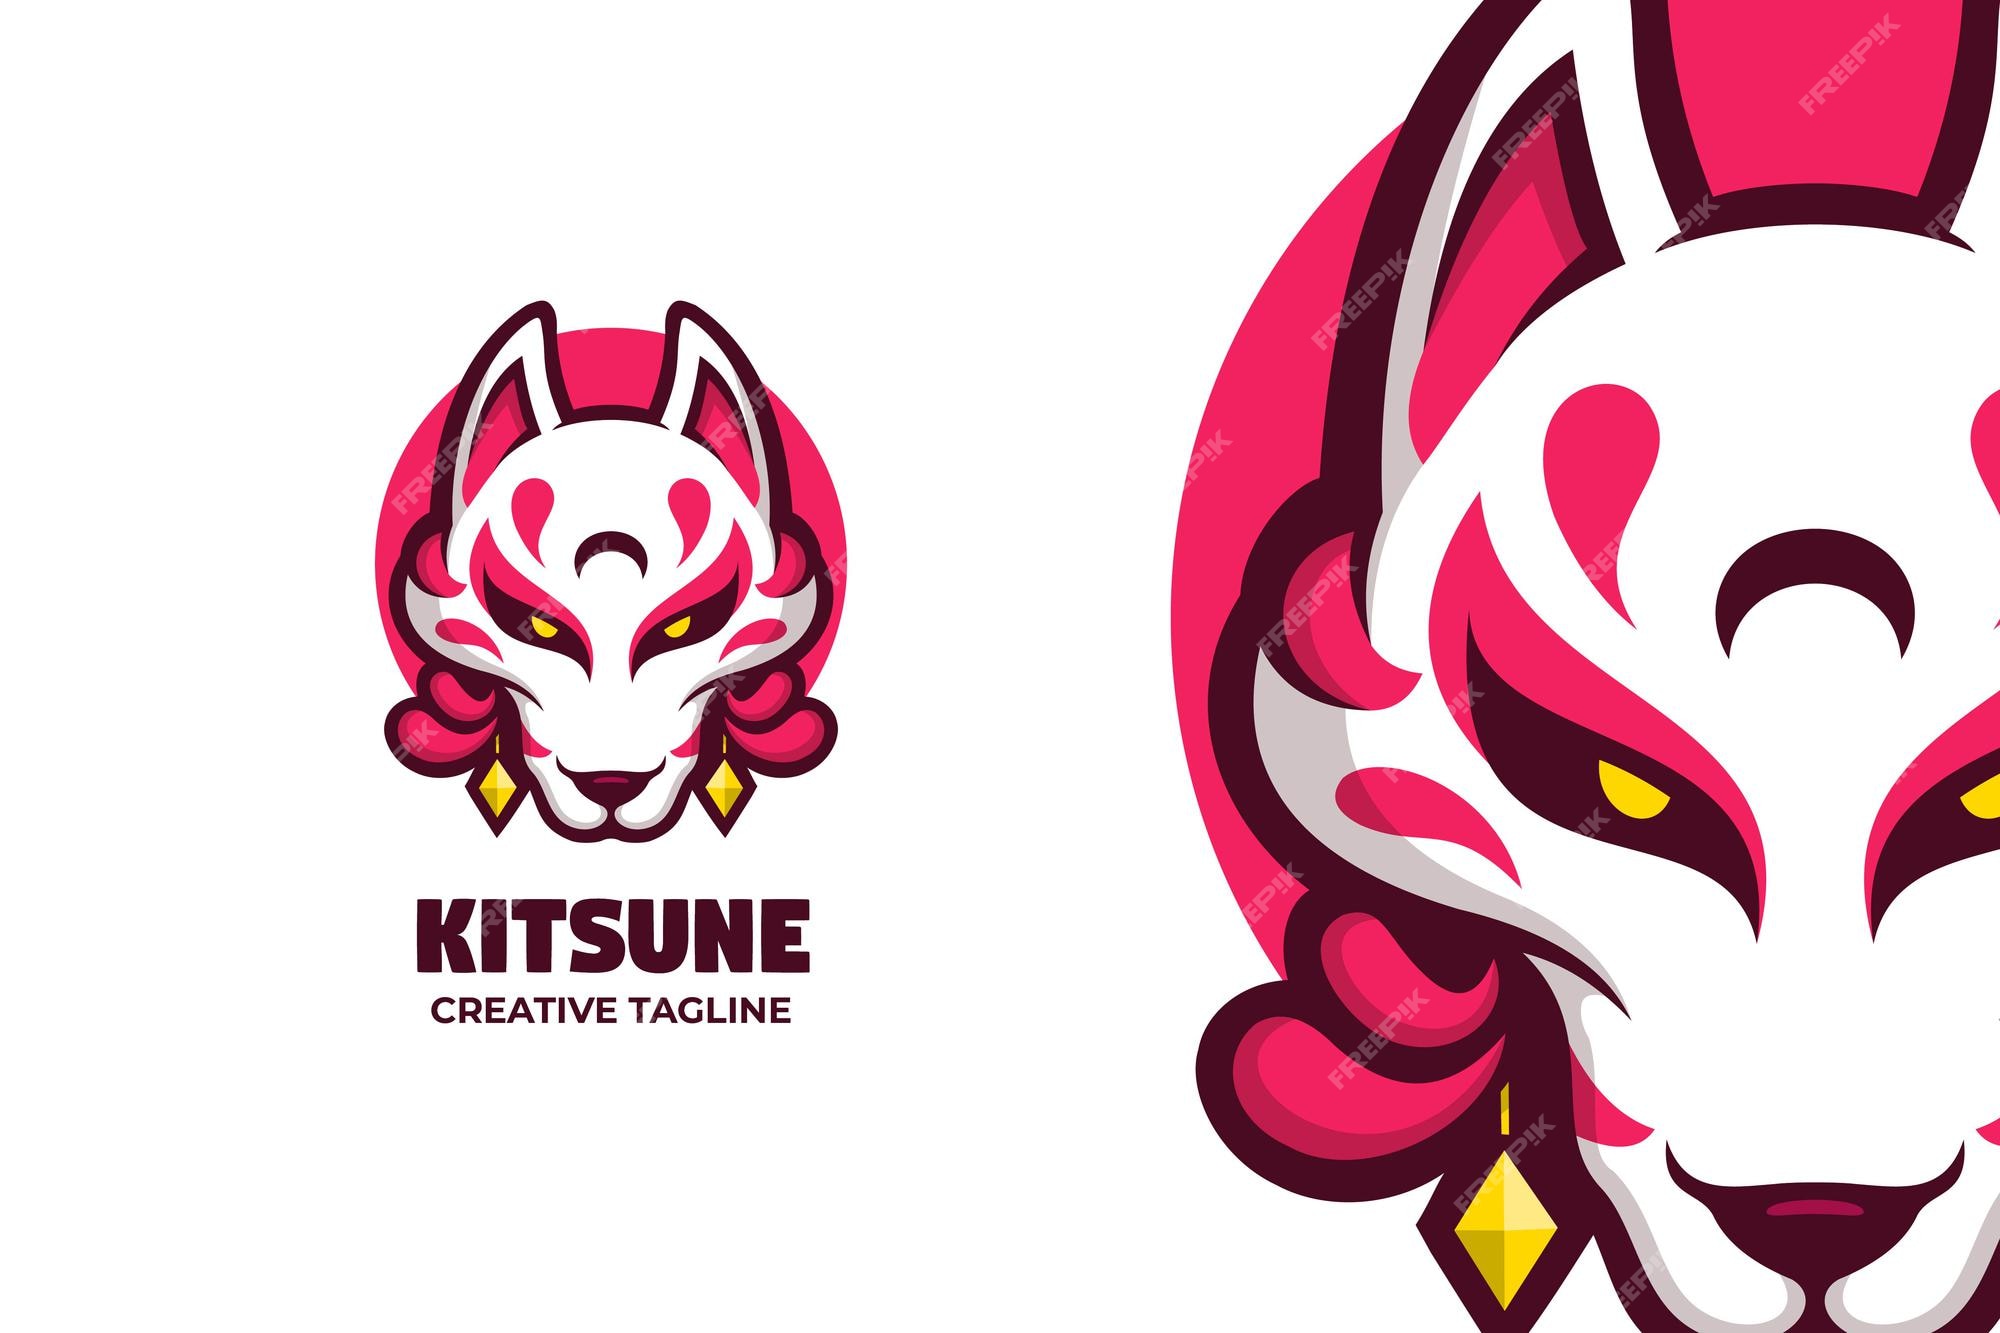 Premium Vector | Kitsune japanese mythology creature mascot logo character